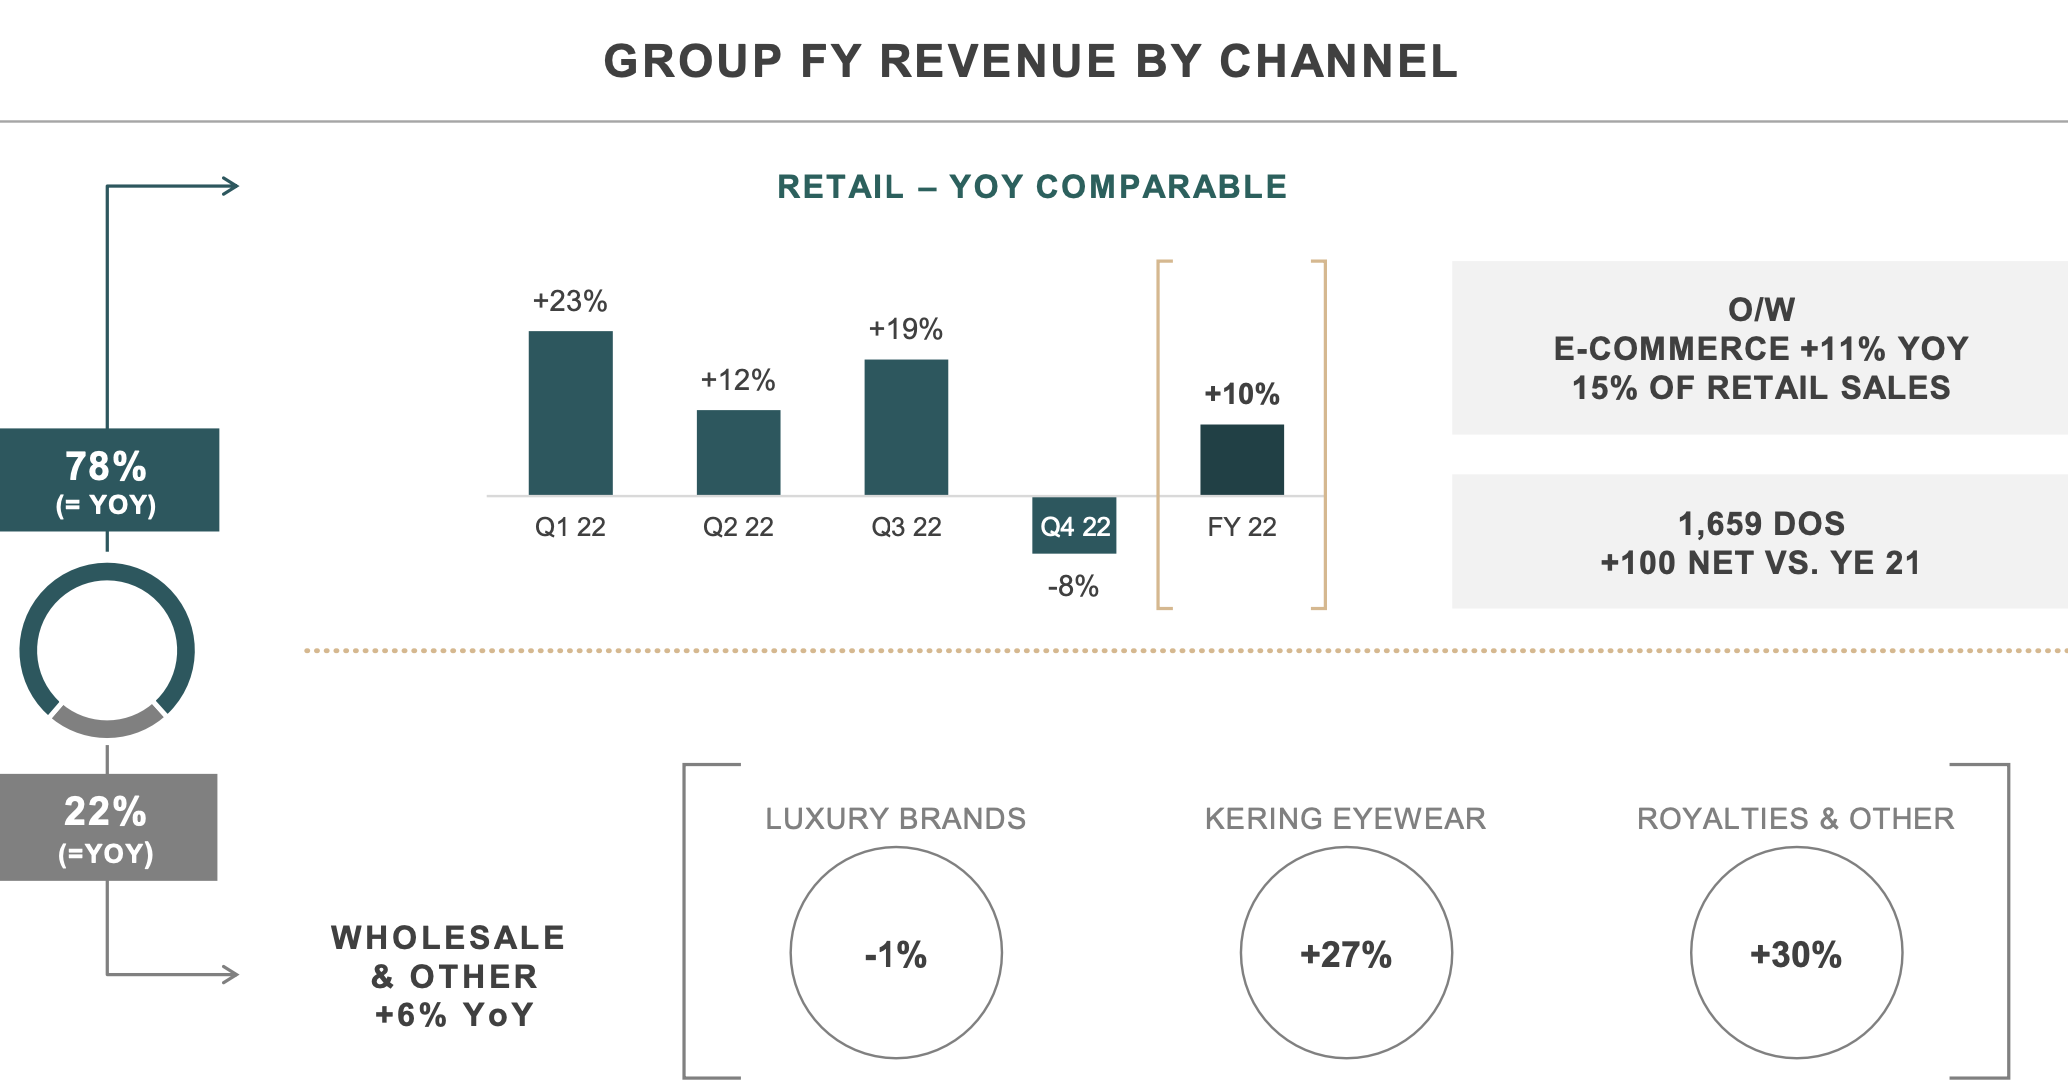 Kering Revenues Vault 35.1% in Q4 as Gucci Improves – WWD